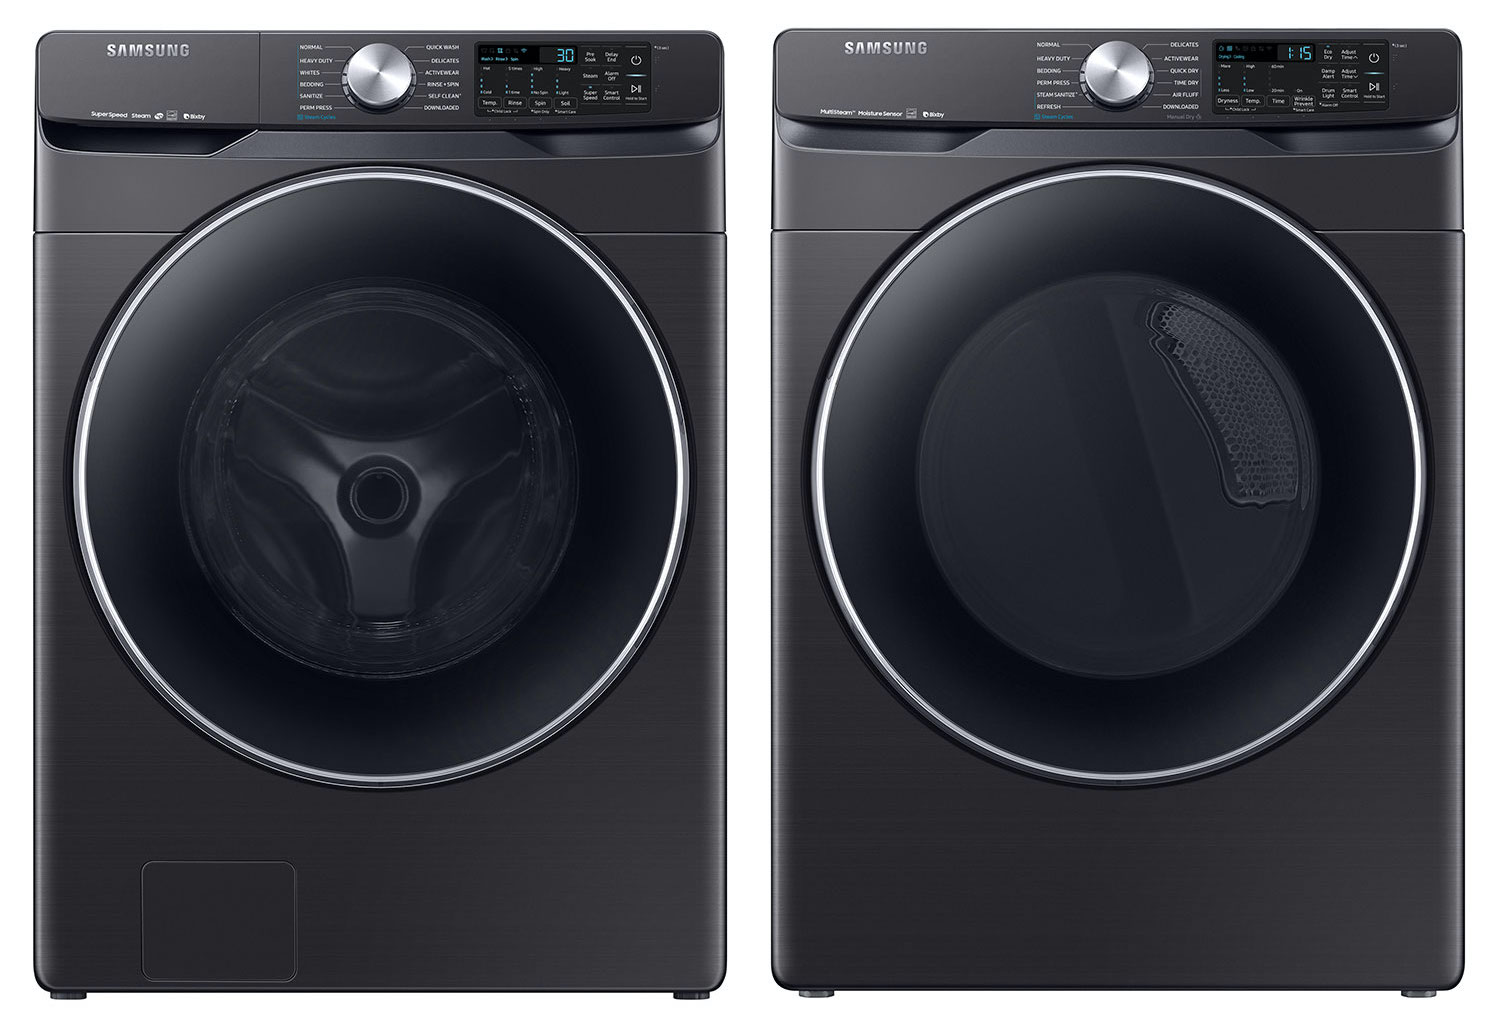 Samsung 5.2 Cu. Ft. High Efficiency Front Load Washer & 7.5 Cu. Ft. Electric Steam Dryer - Black